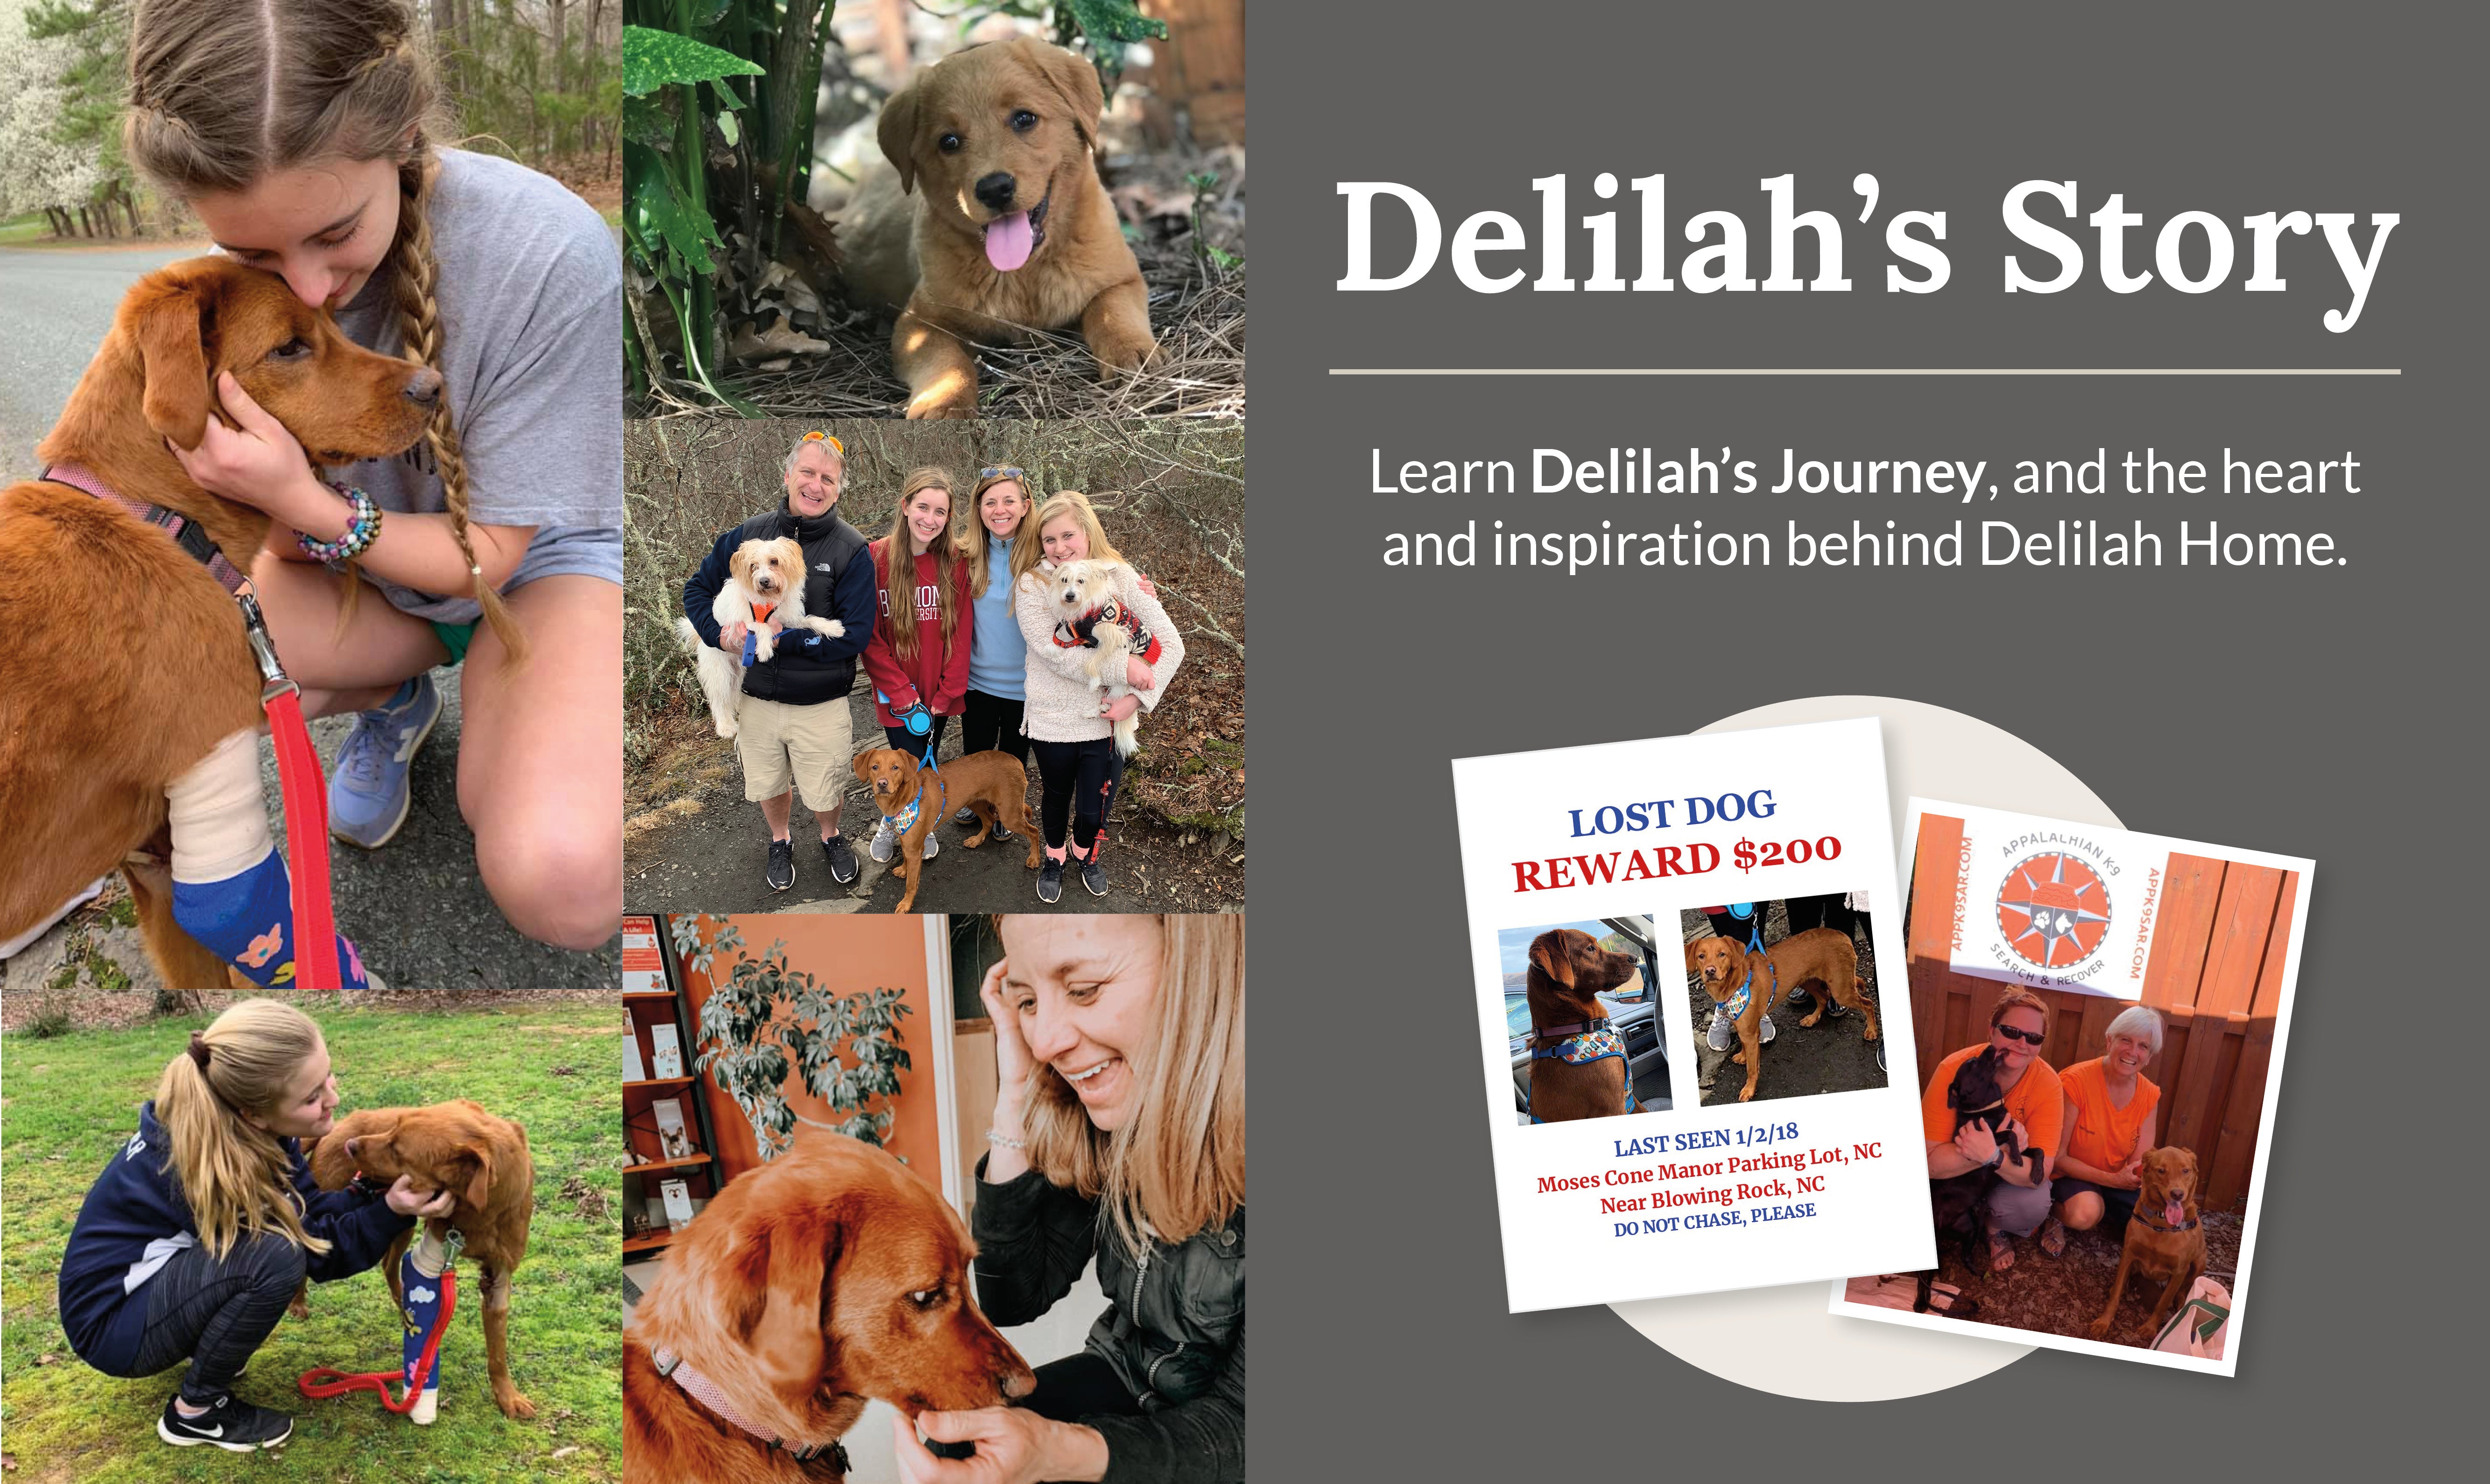 Delilah's story